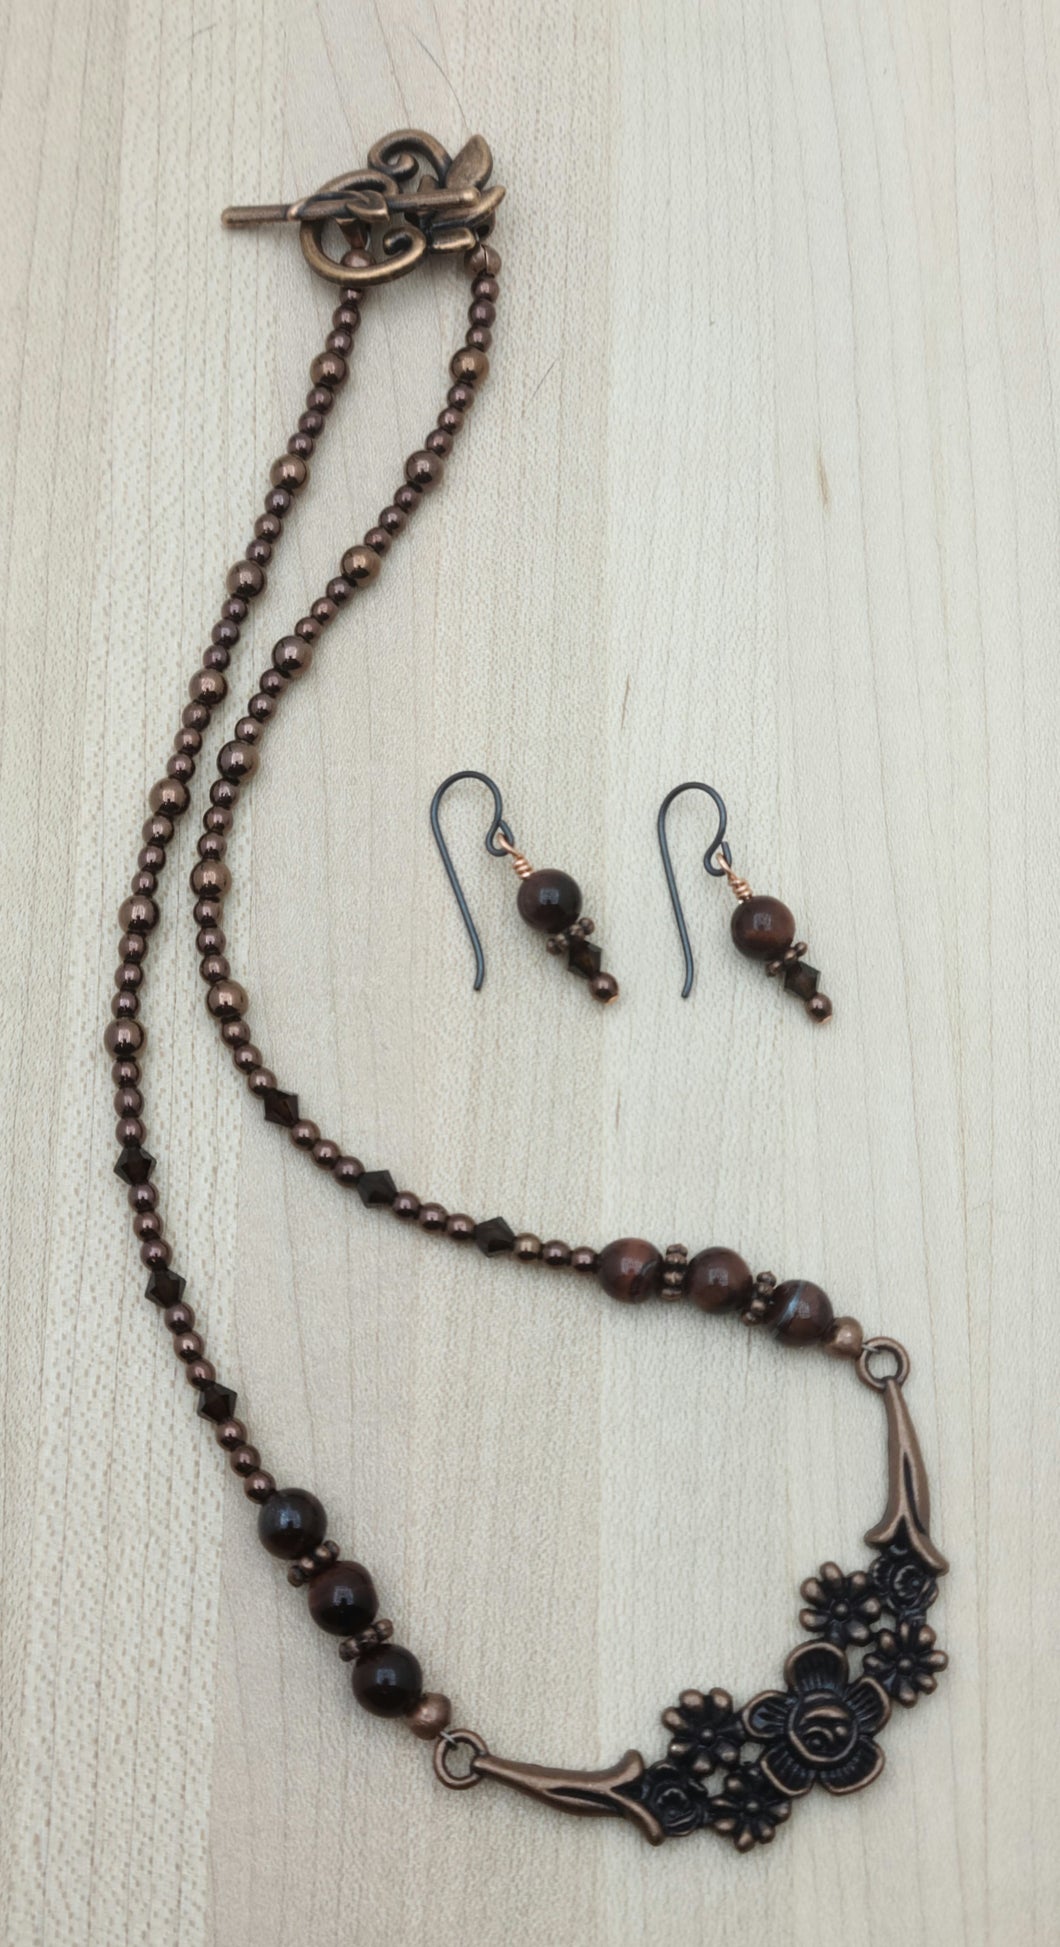 Antique Copper Flowers Necklace & Earrings